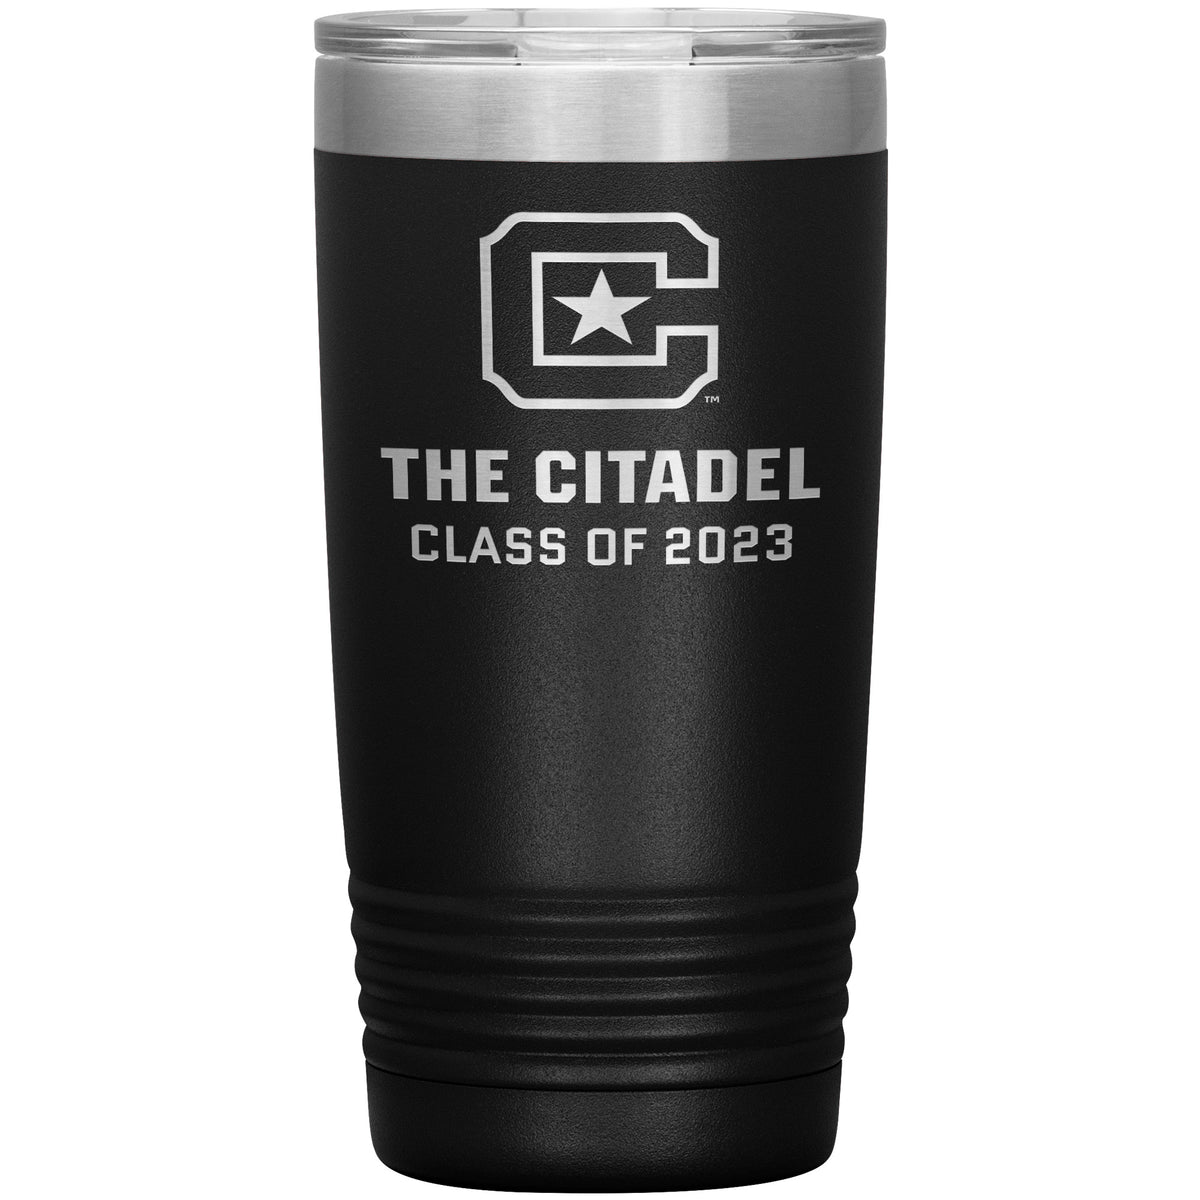 Class of 2023 The Citadel C Insulated Tumbler - 20oz- Black